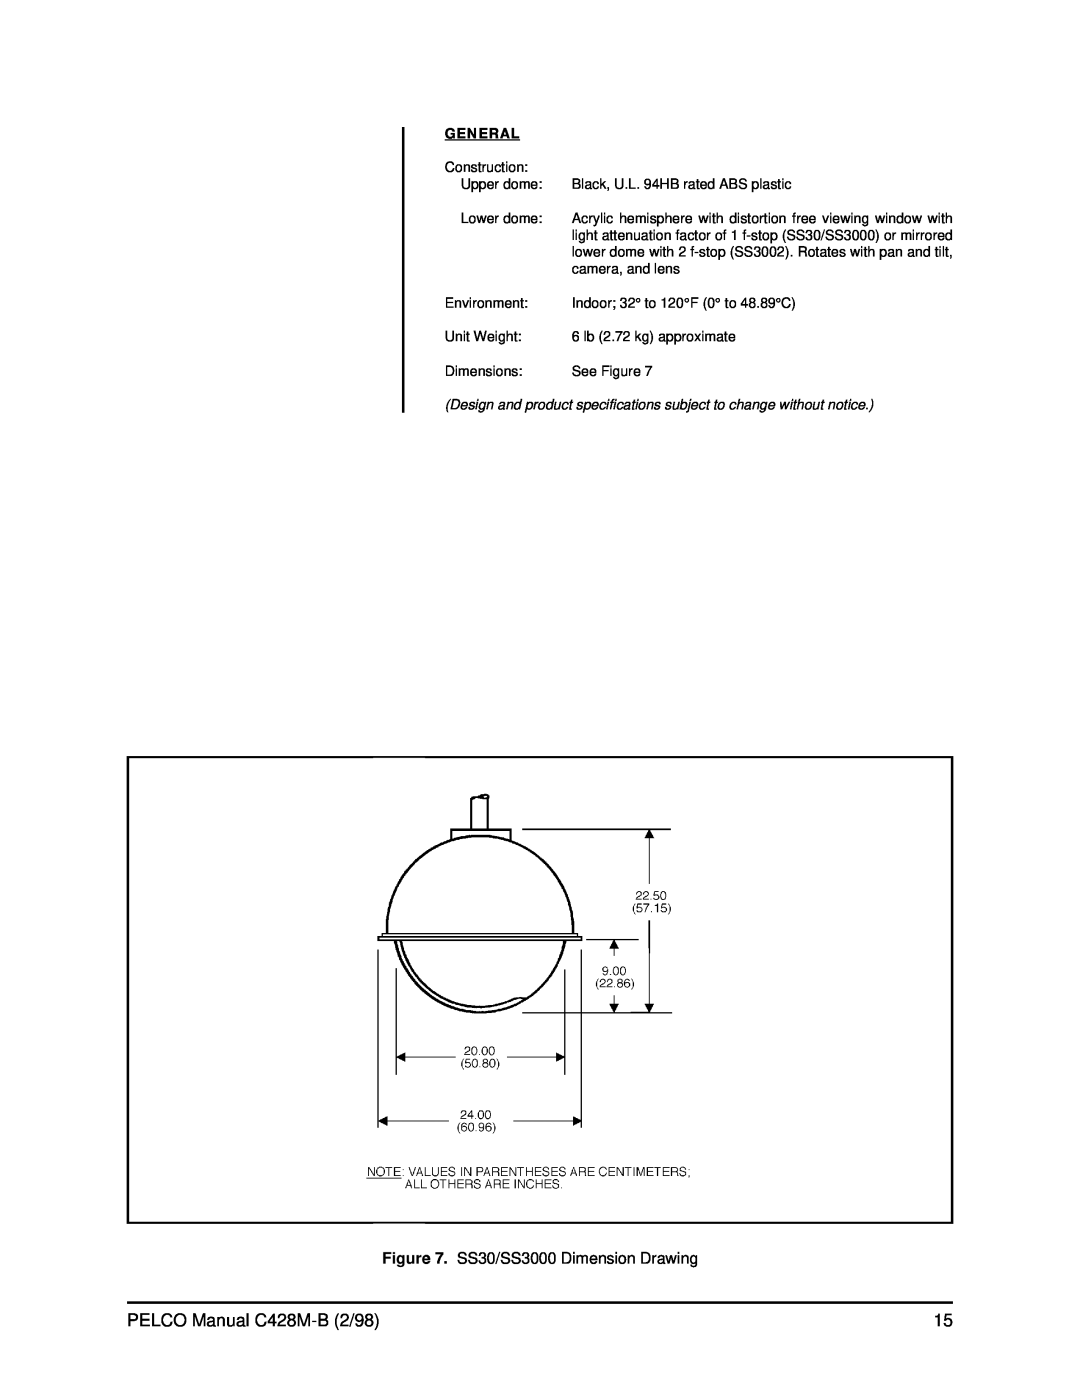 Pelco SS3002 operation manual PELCO Manual C428M-B2/98, SS30/SS3000 Dimension Drawing, General 